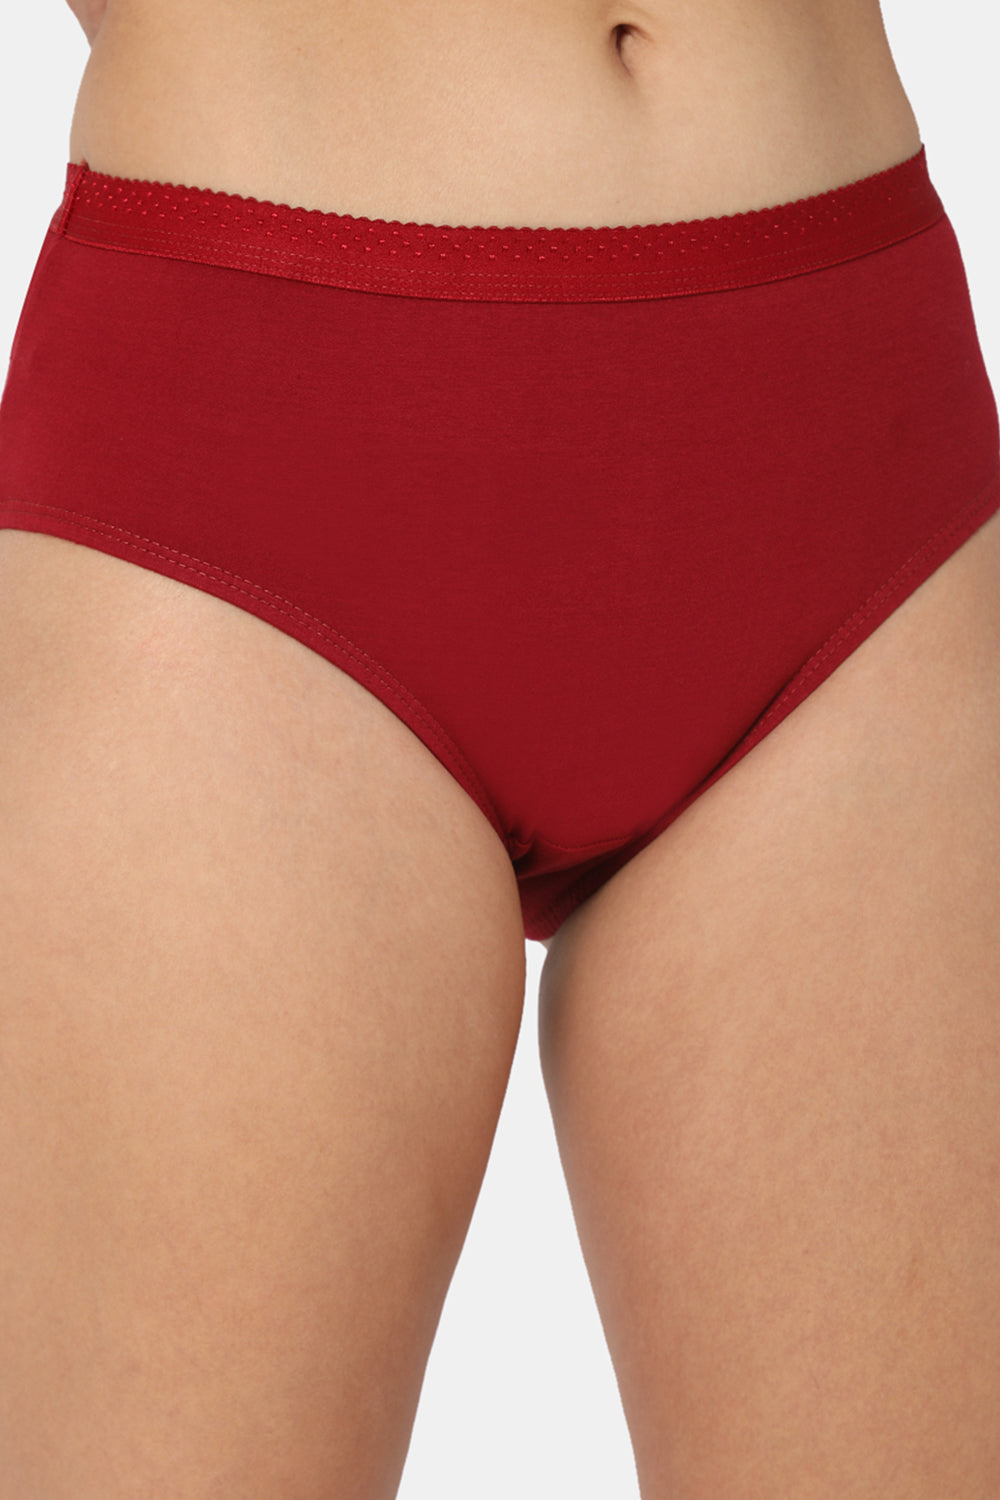 Buy underwear for ladies online